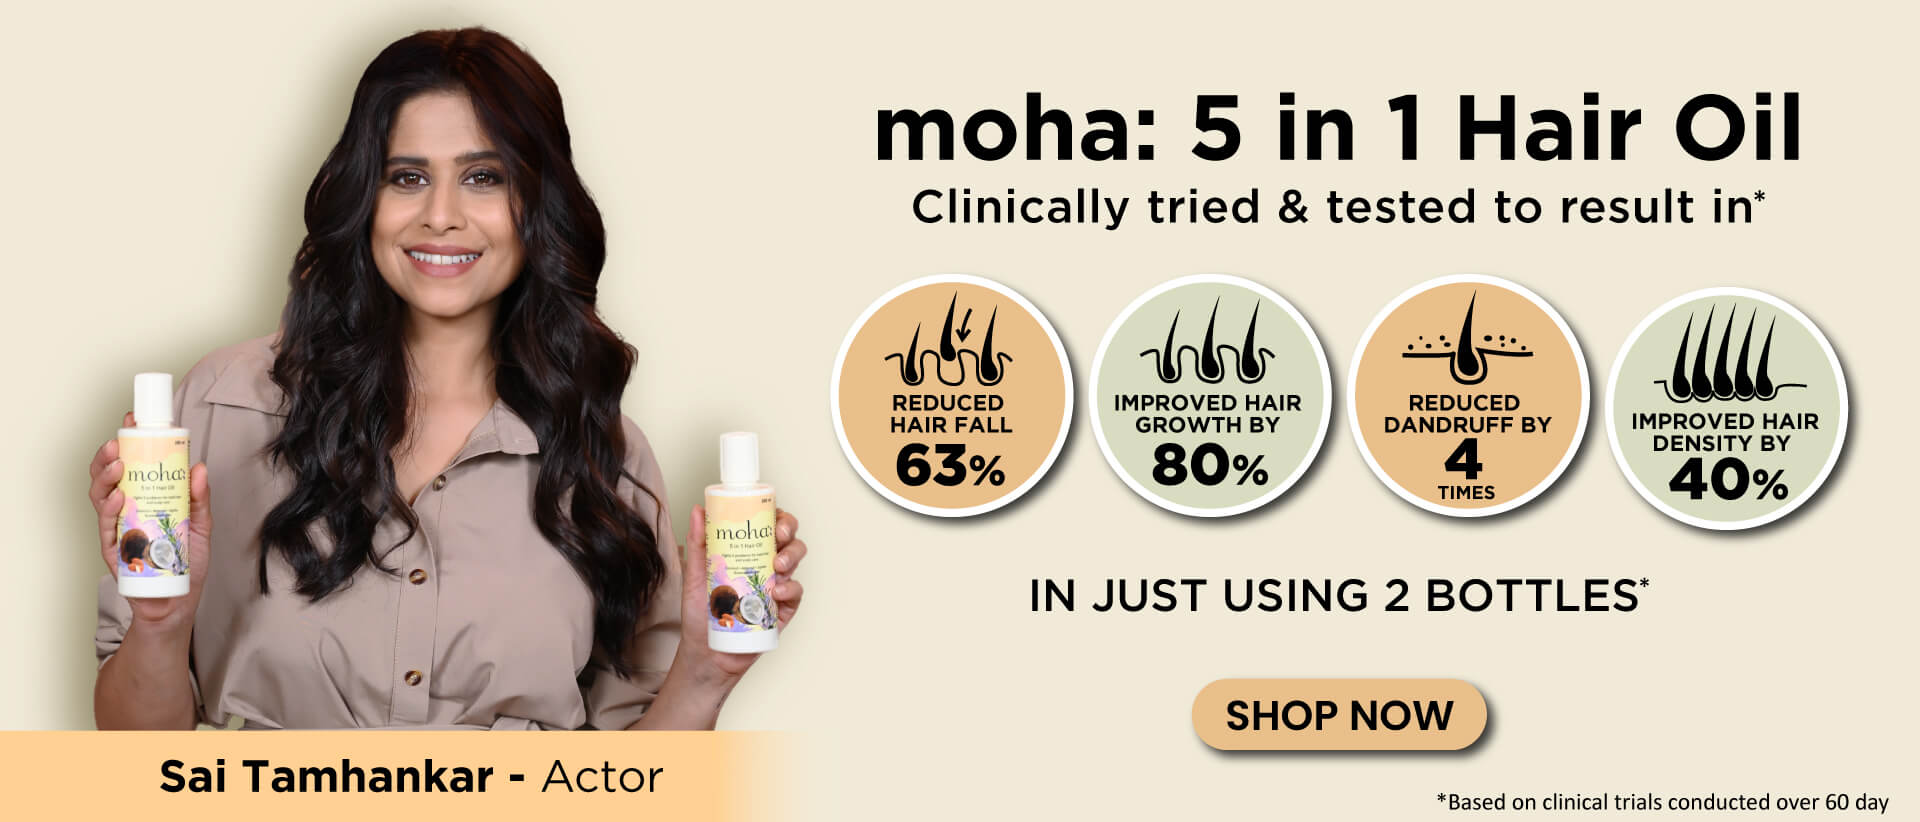 moha: 5 in 1 Hair Oil